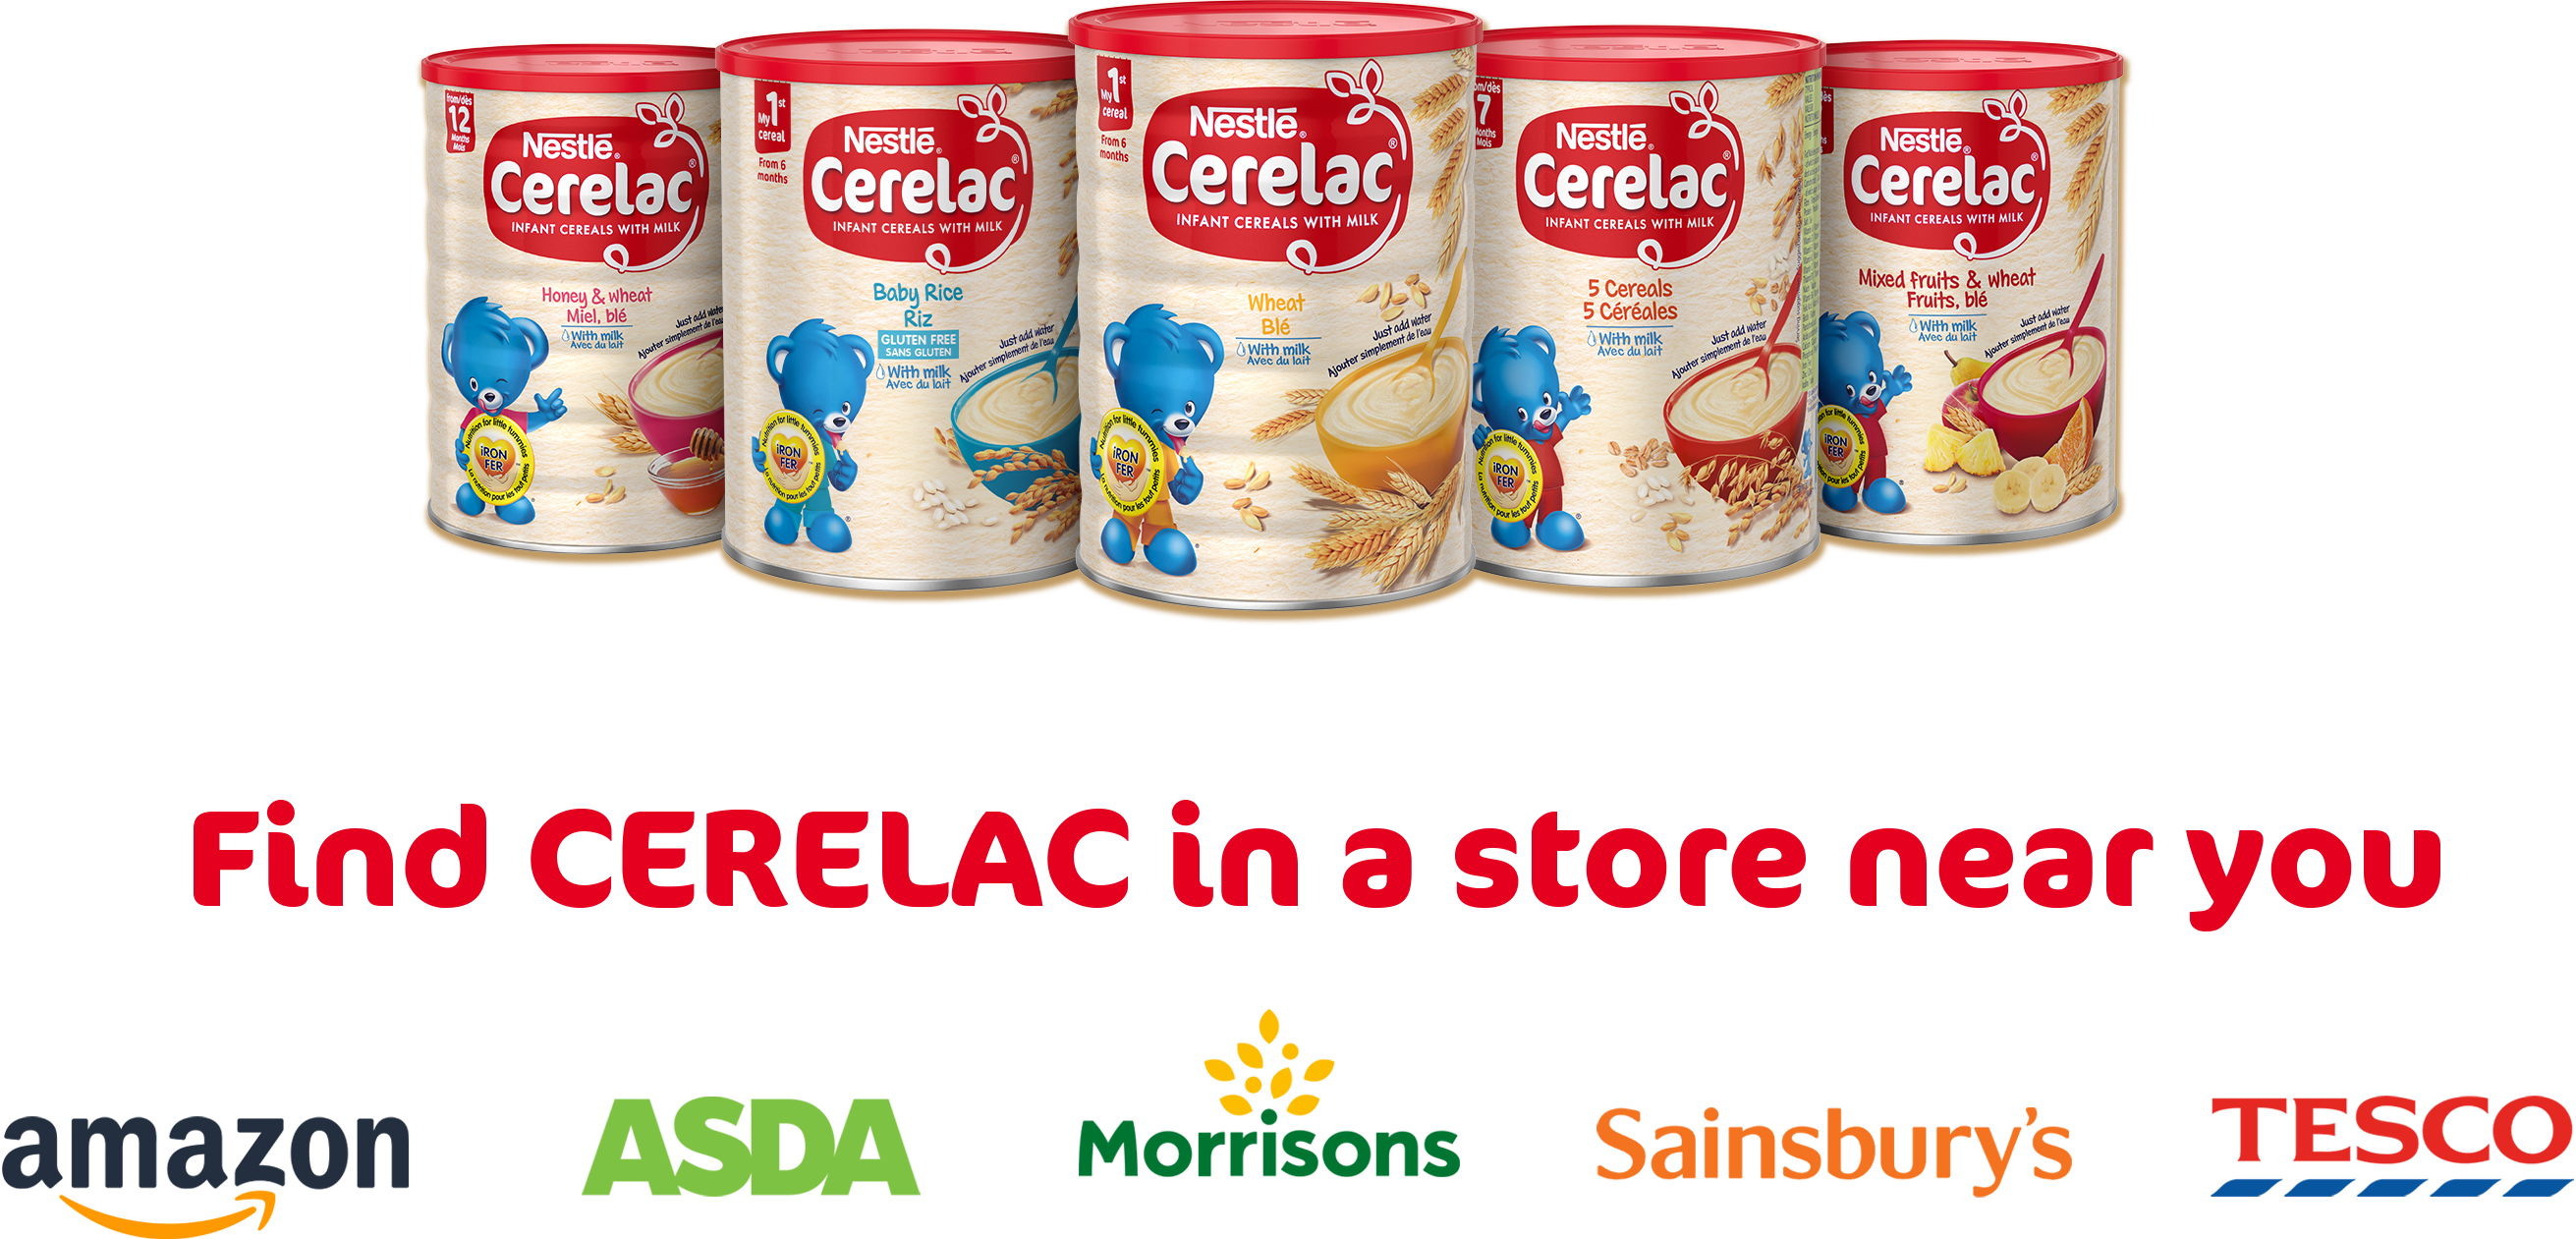 Our Online range of Nestlé Cerelac